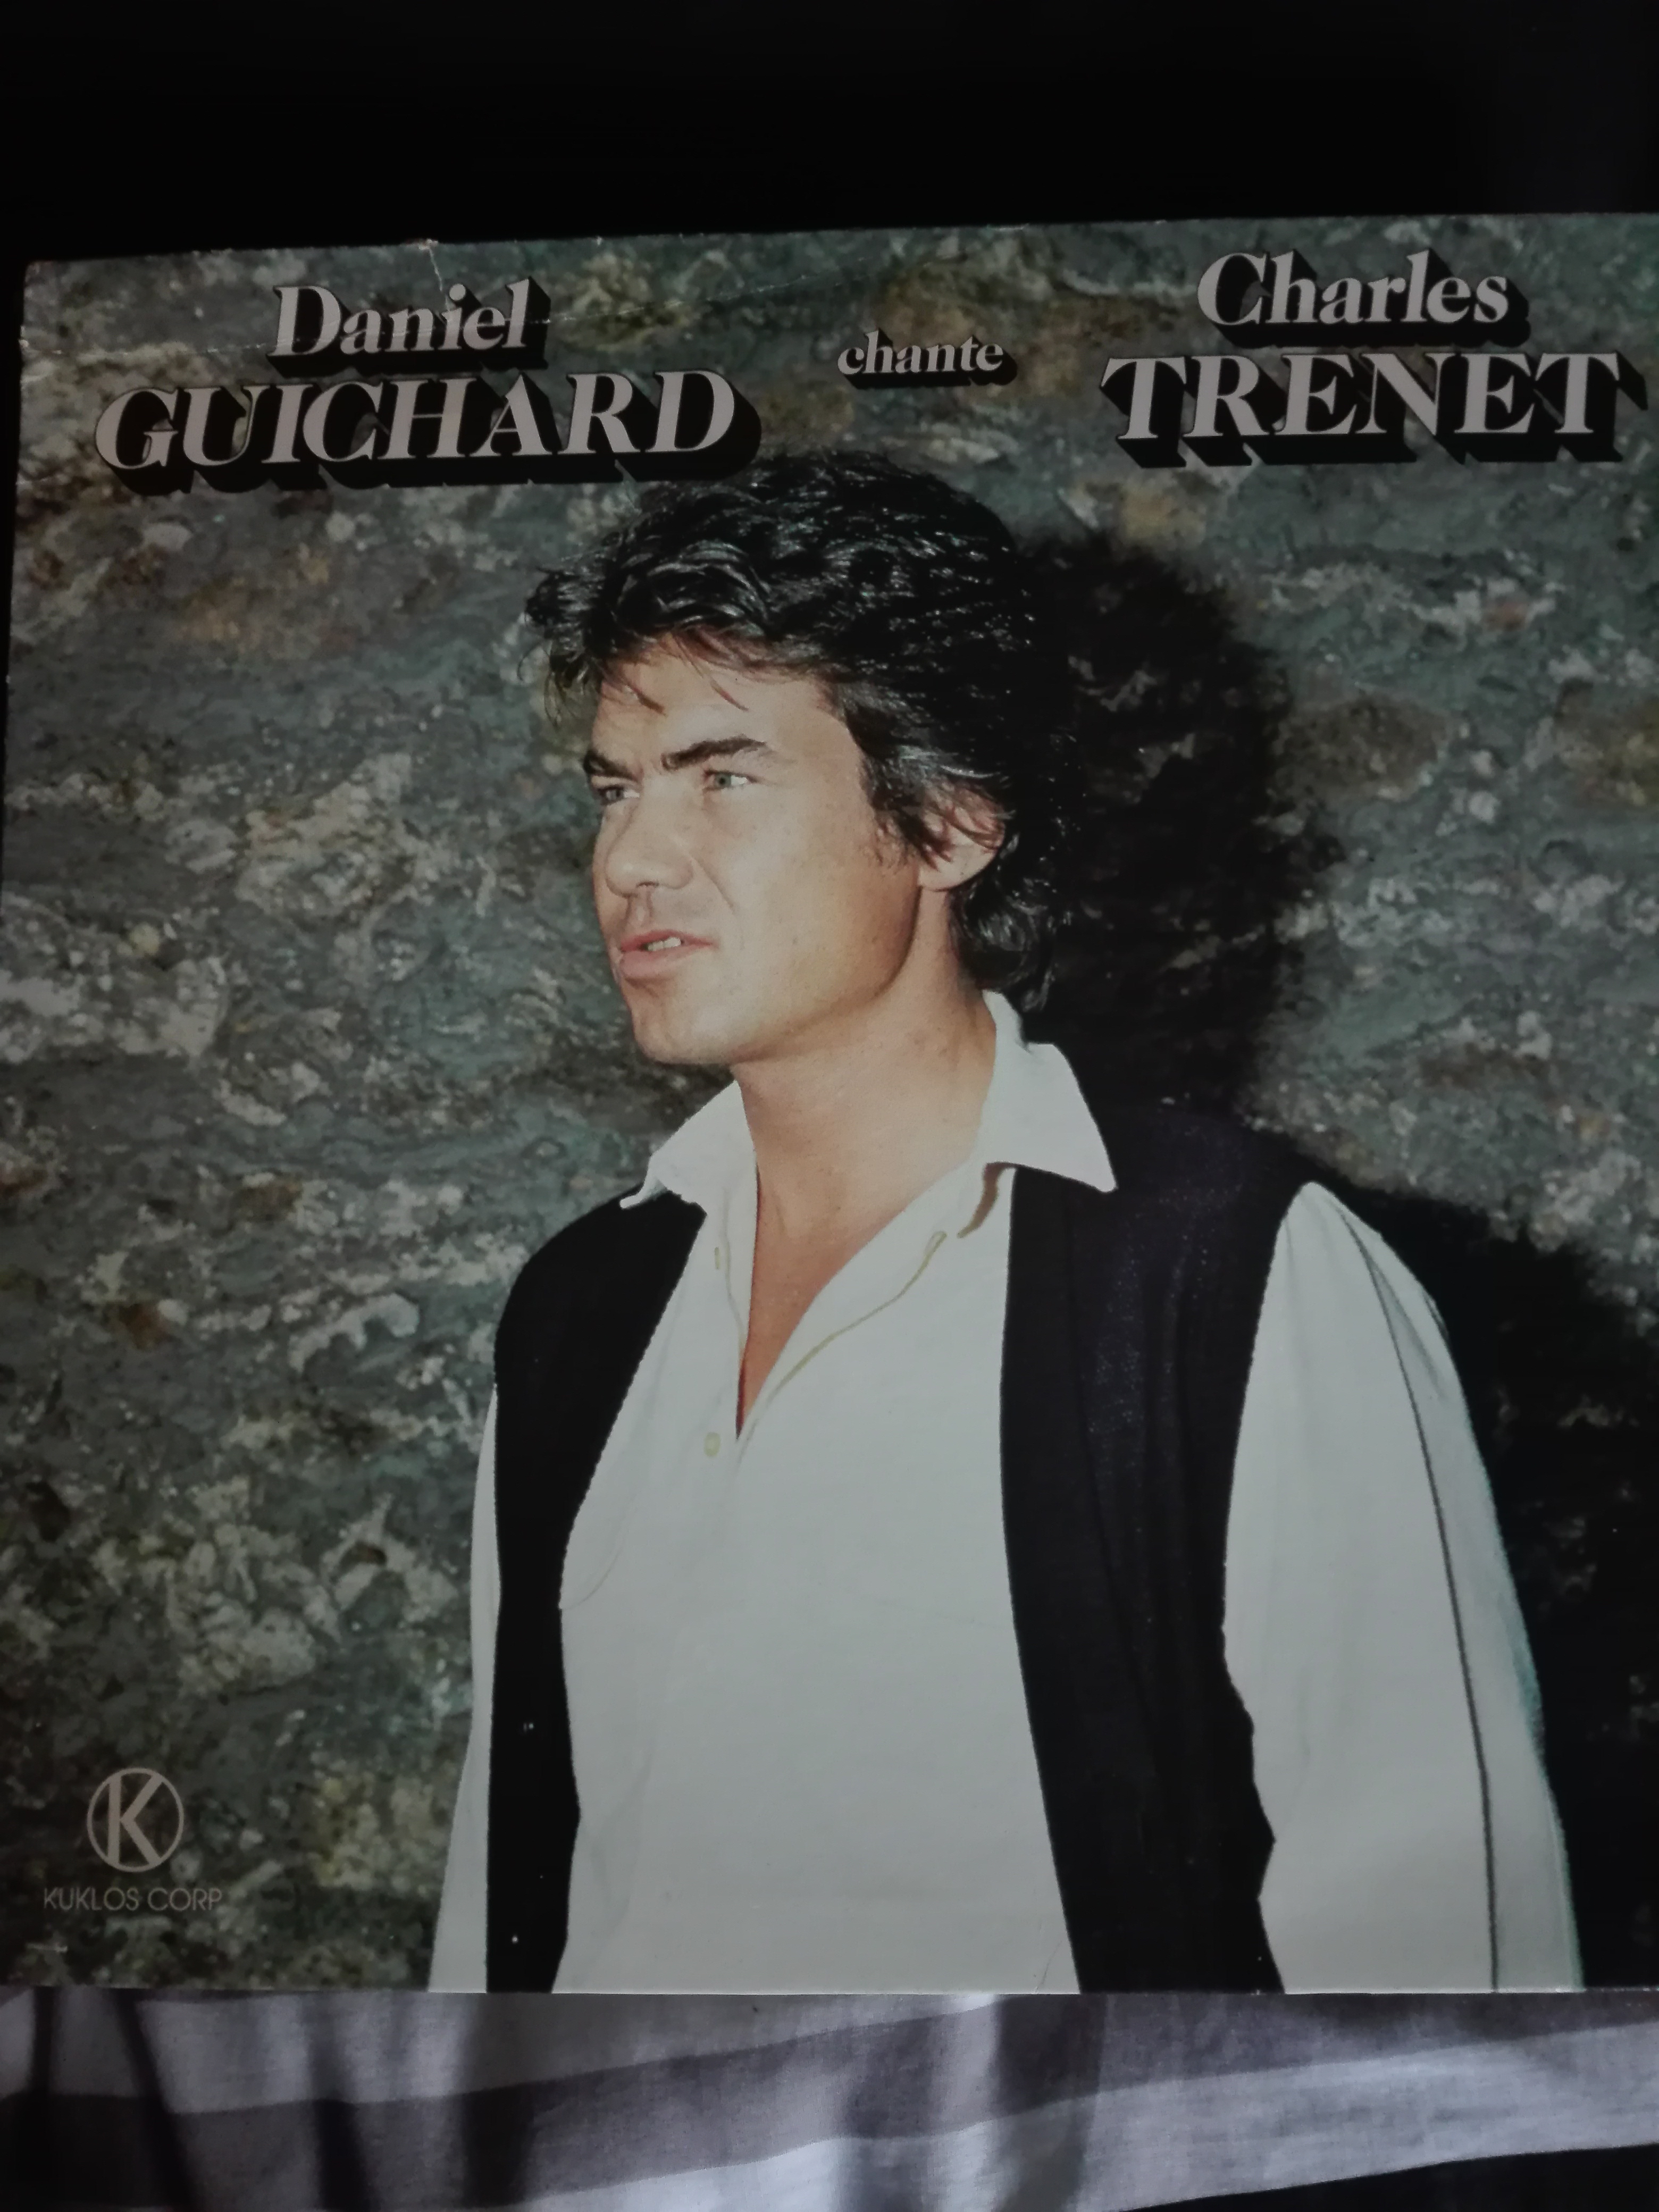 Acheter disque vinyle DANIEL  GUICHARD Chante Charles trenet a vendre